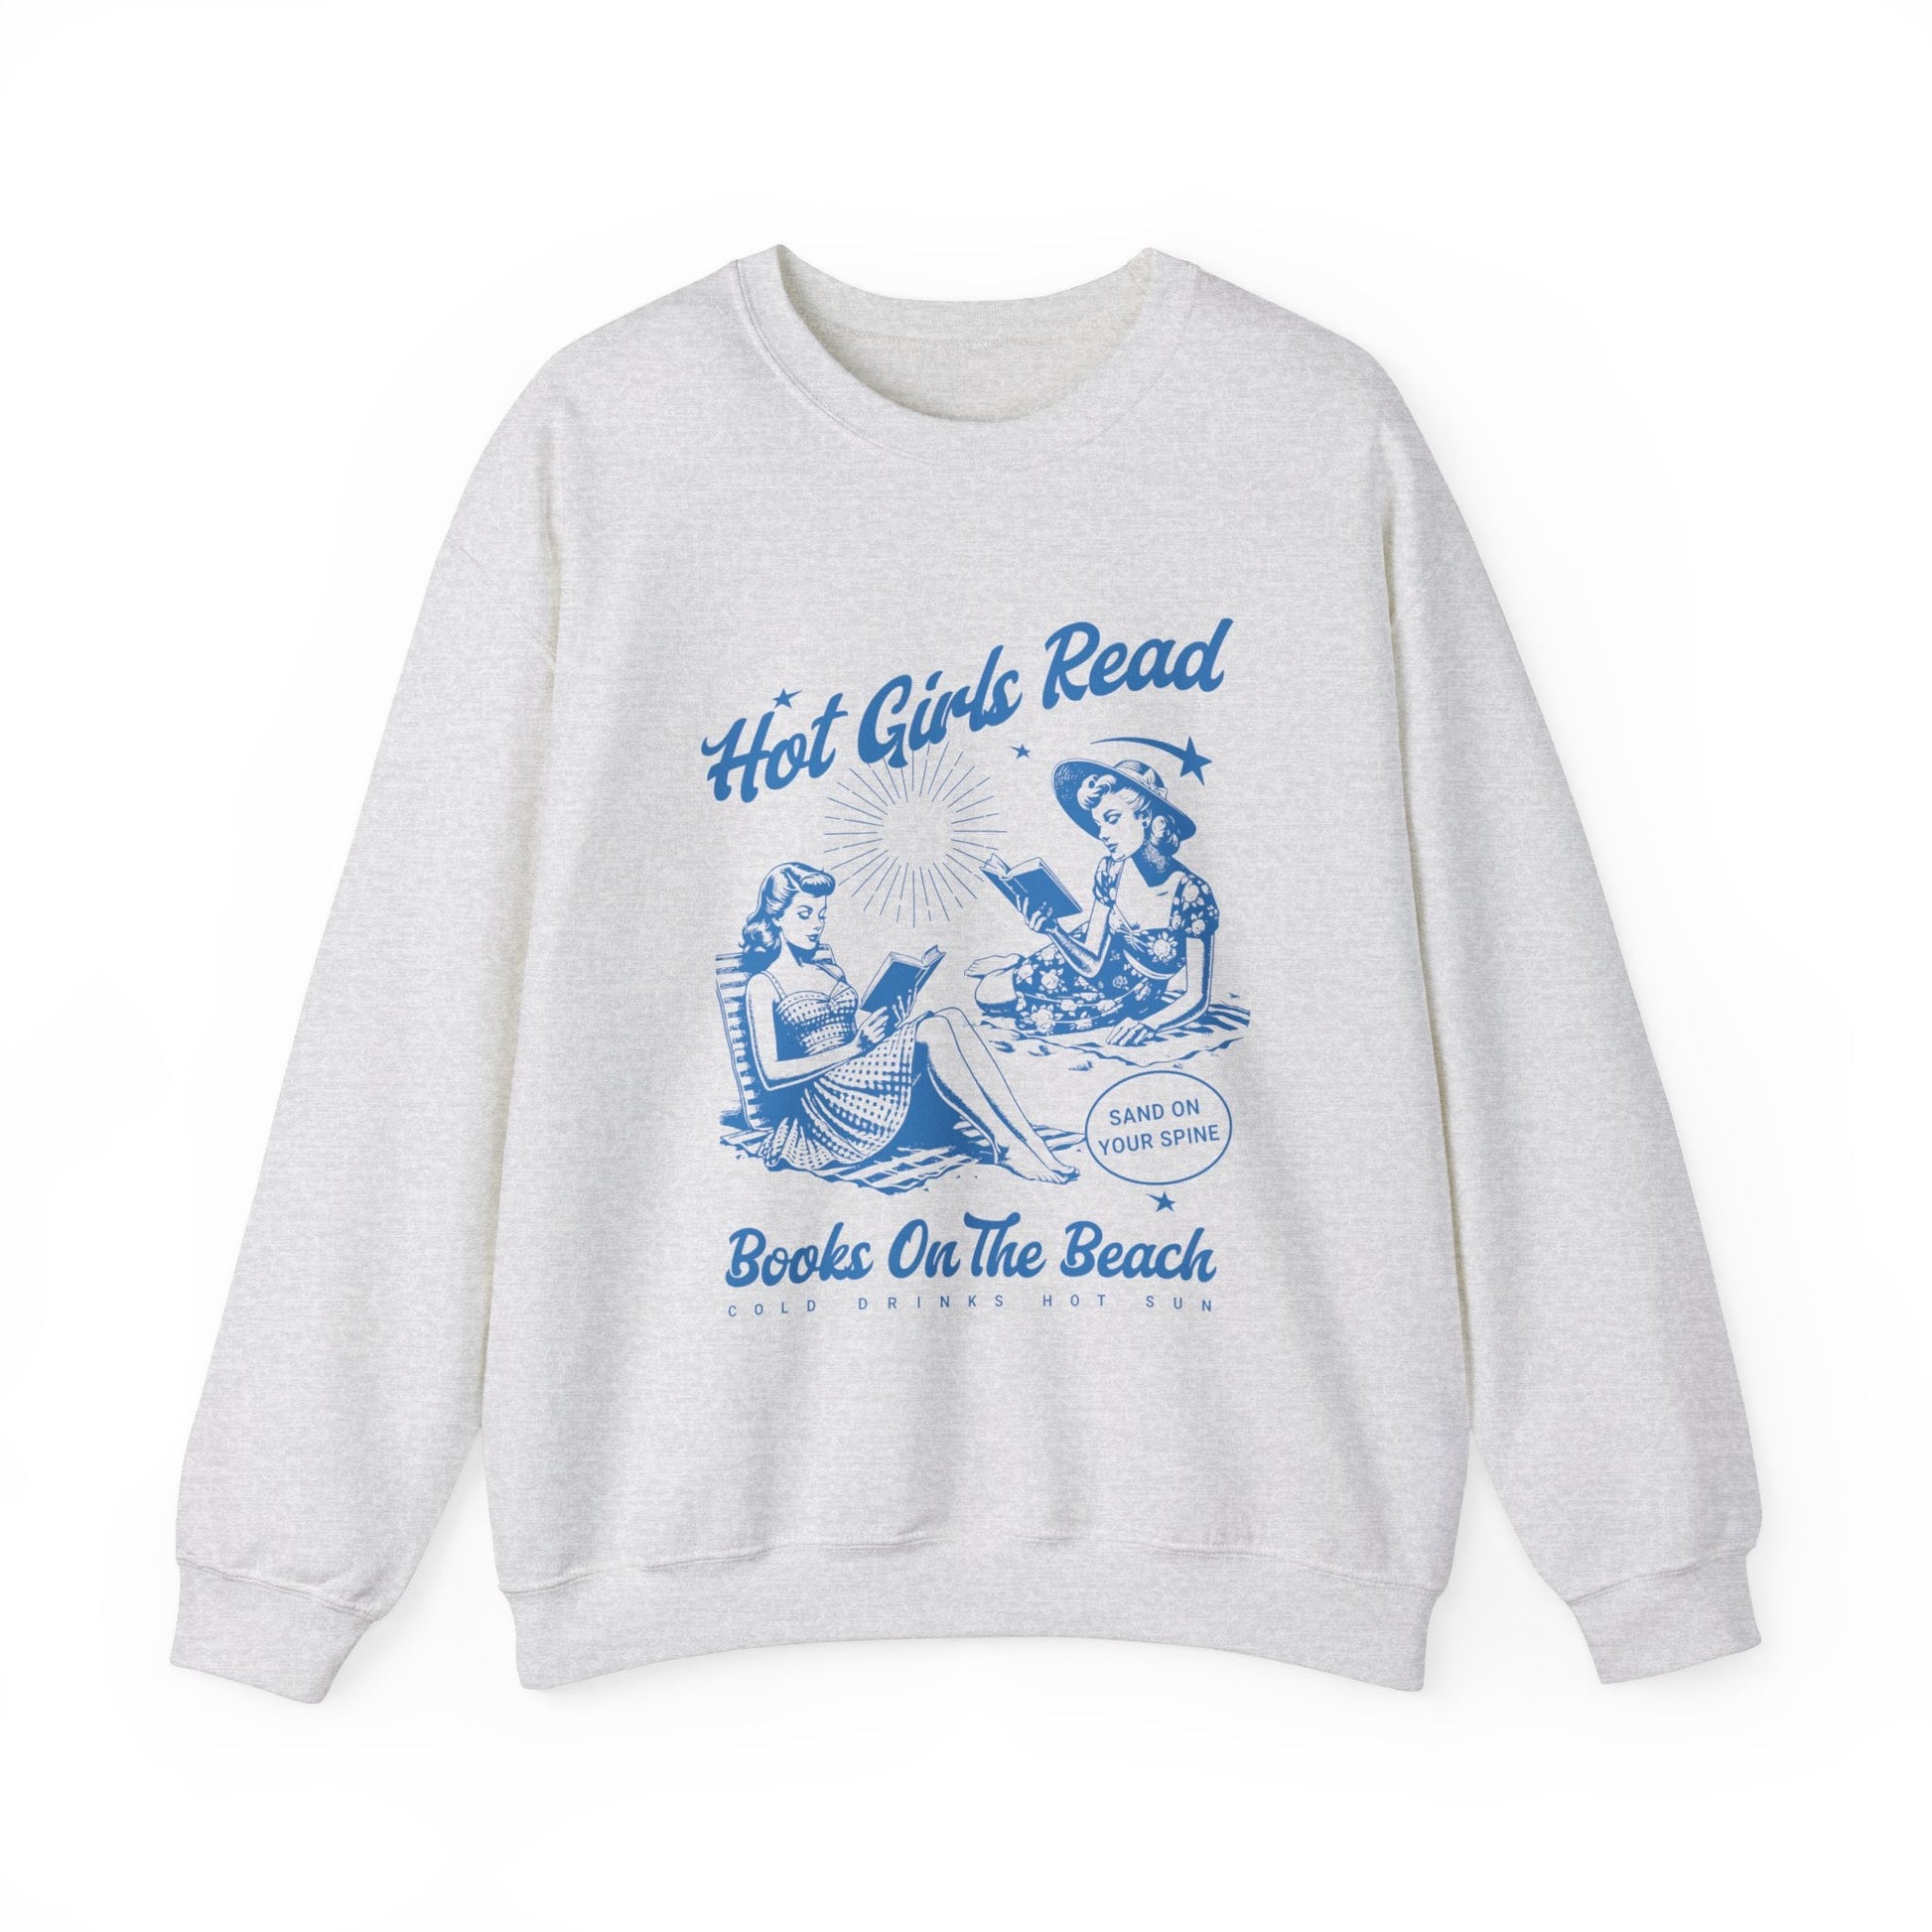 Hot Girls Read Books on the Beach Sweatshirt, Beachy Shirts Coconut Girl Retro Reading Crewneck Booklover Gifts Sweater Smut Sweatshirt